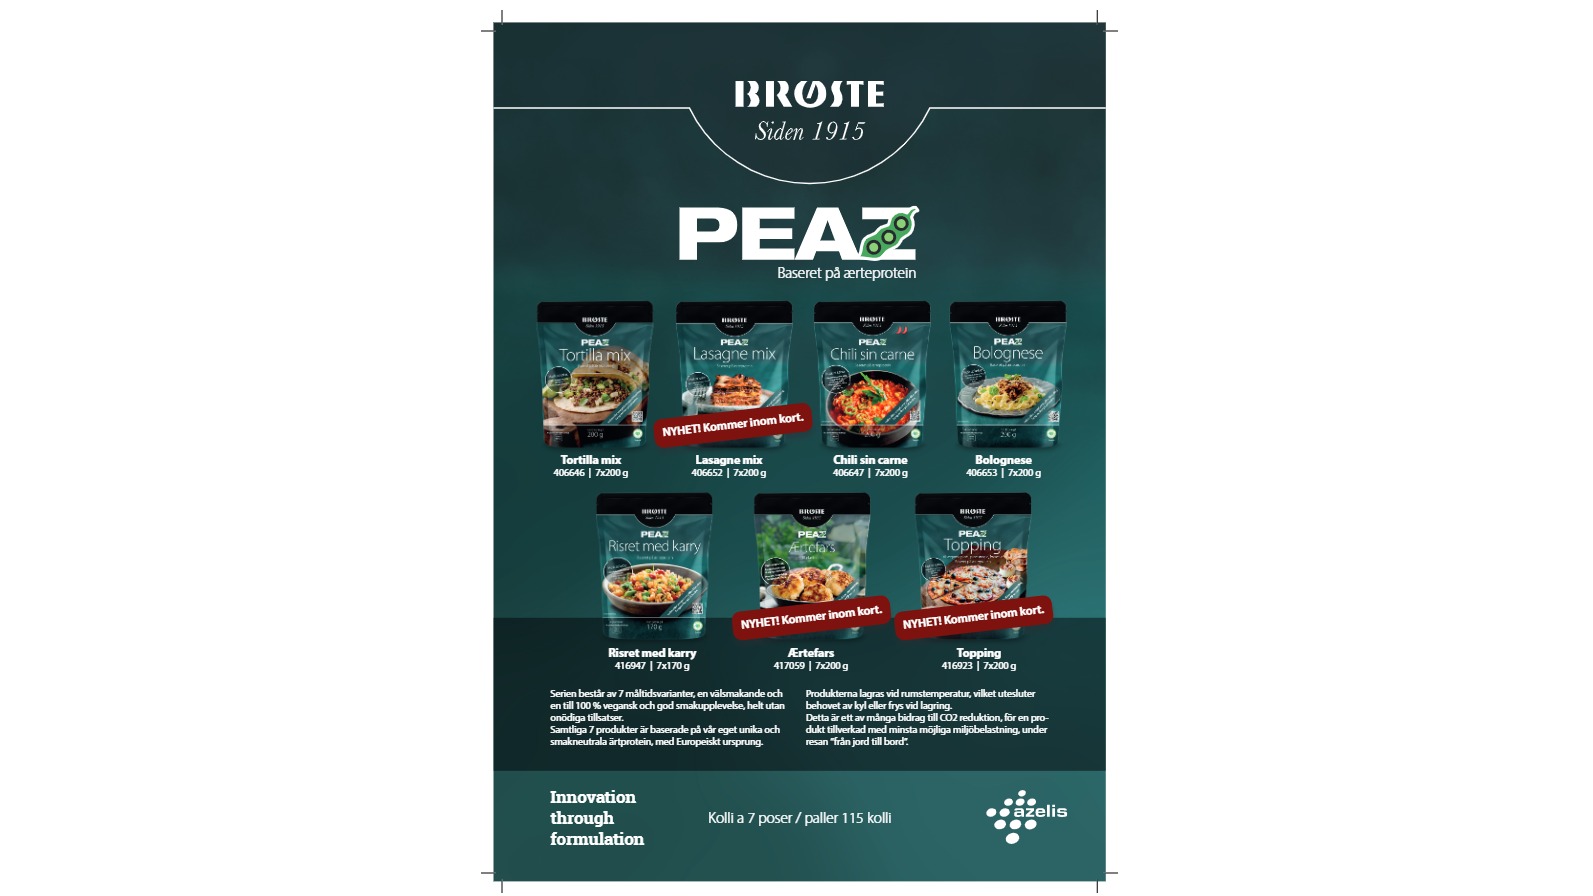 PEAZ-7-products-presentation-retail-1